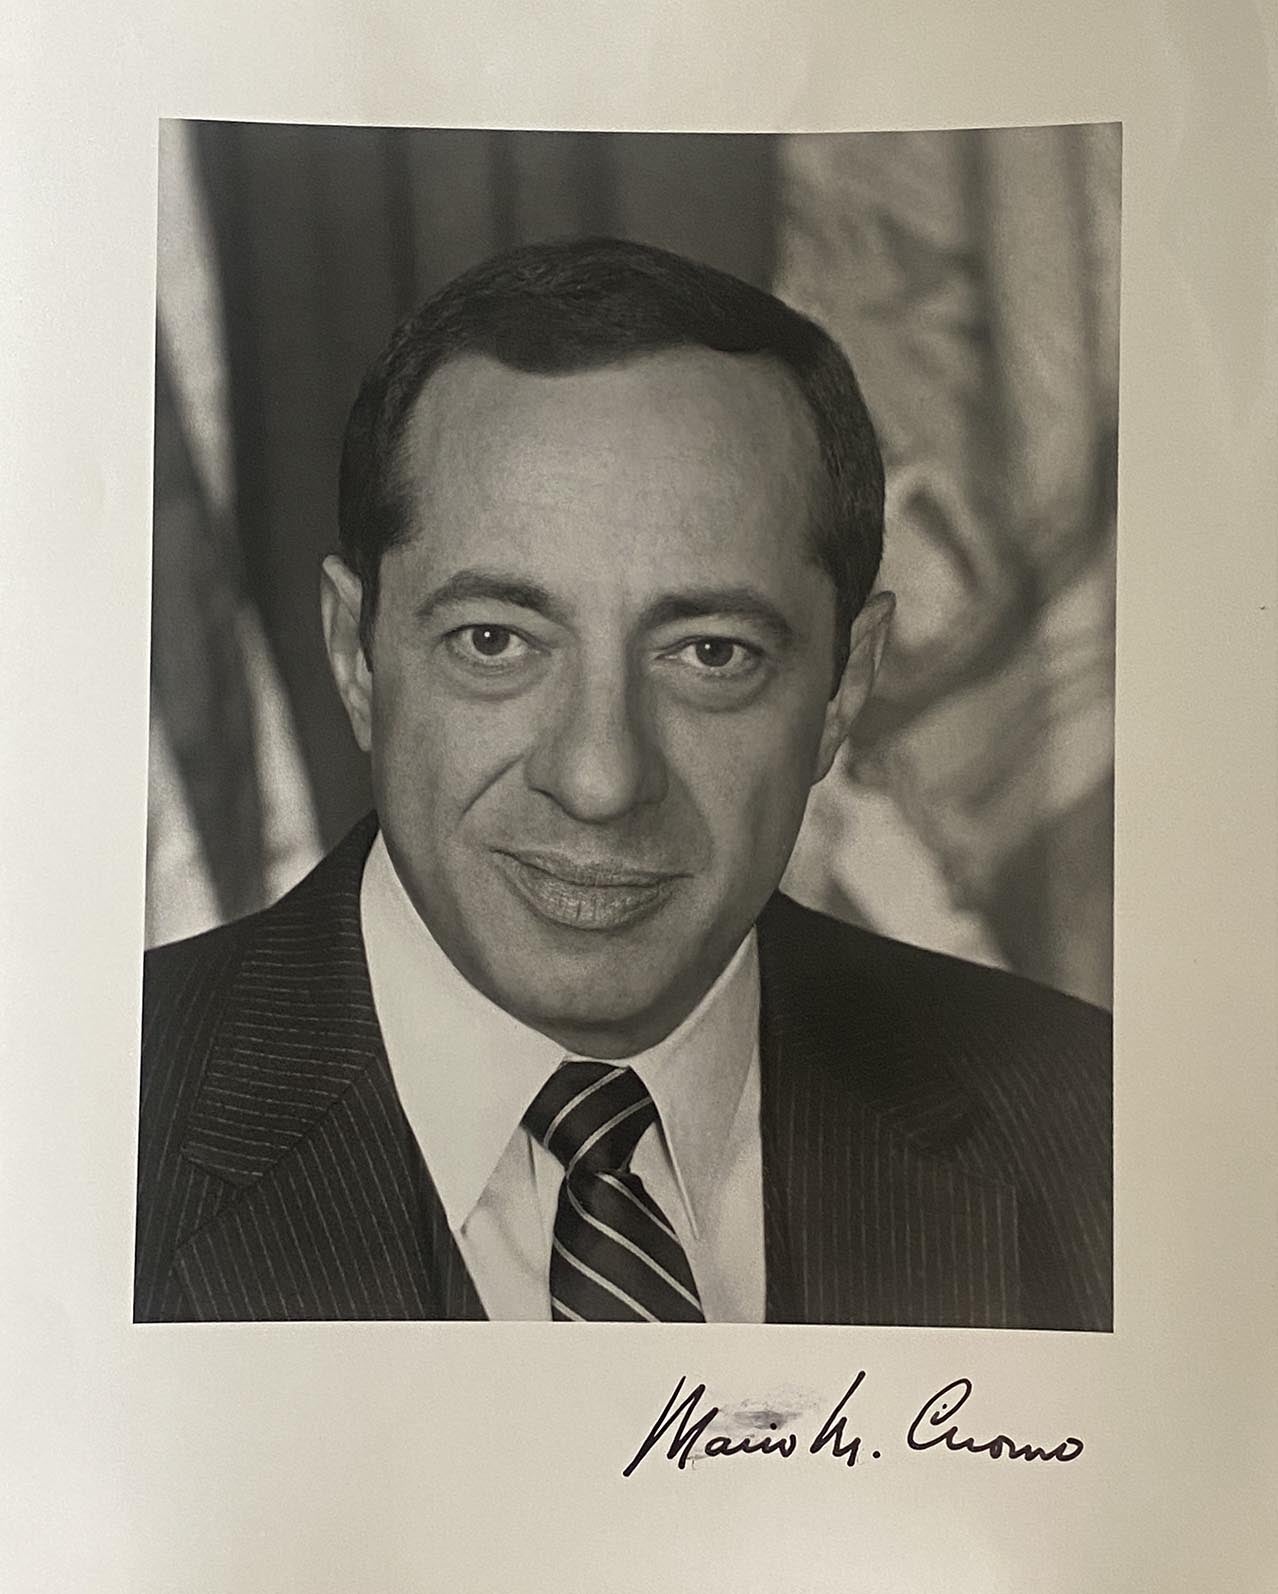 Governor of New York Mario Cuomo signed photo